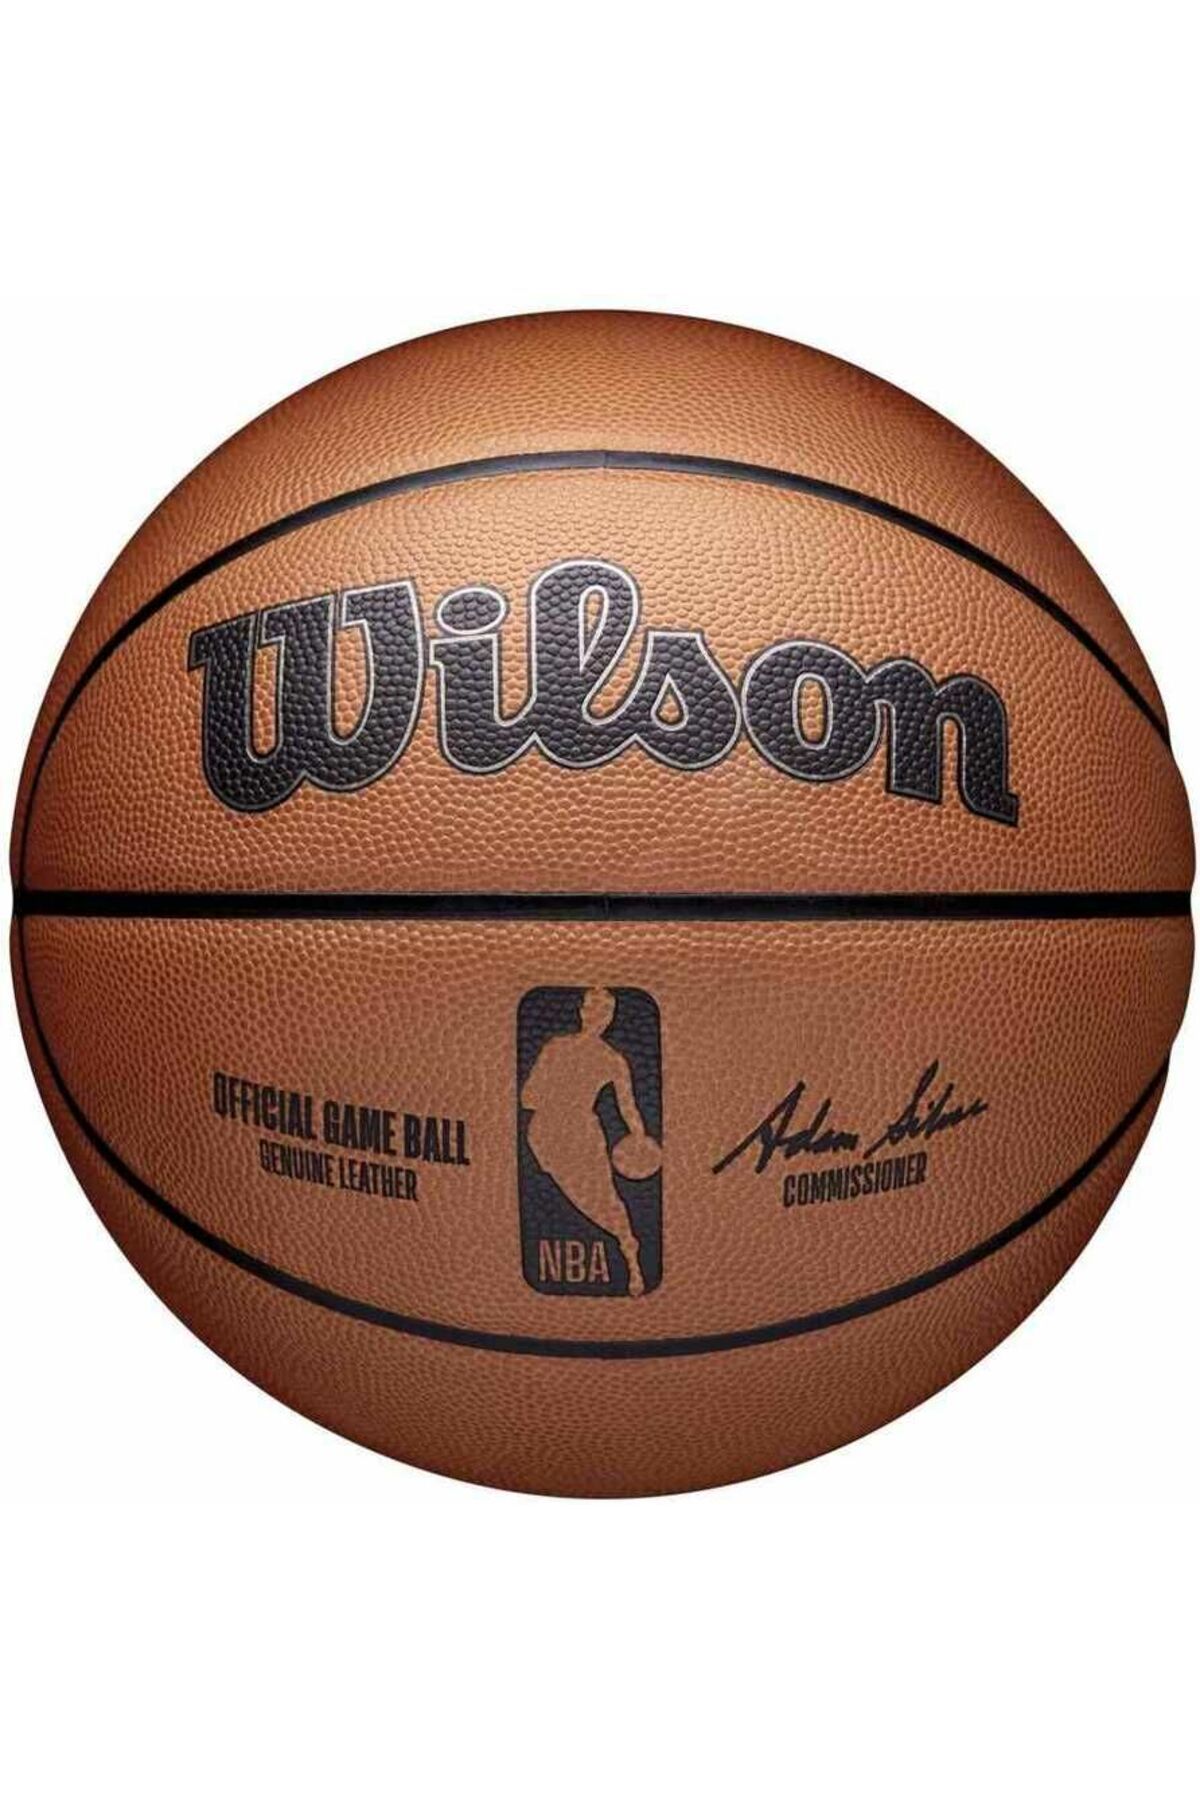 Wilson Nba Resmi Maç Topu No7 Basketbol Topu Wtb7500xb07